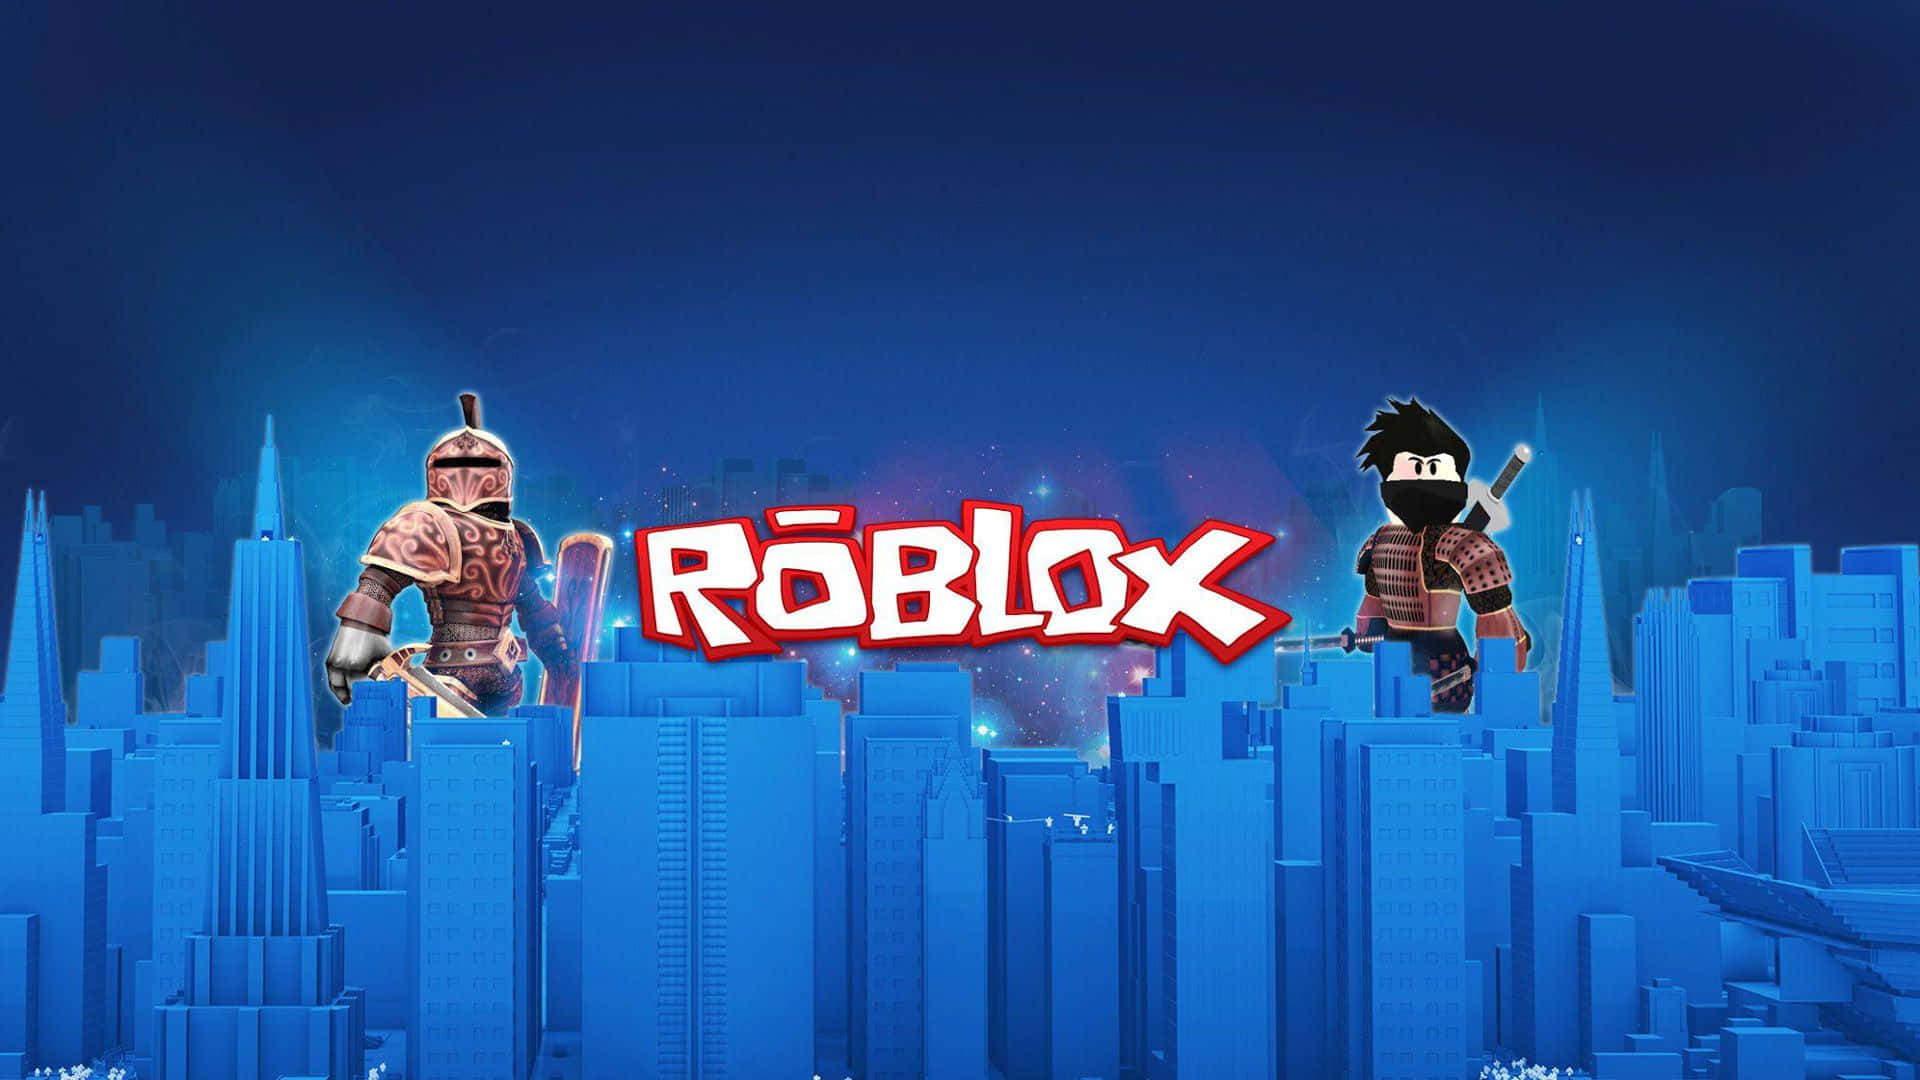 uxRoblox - Roblox - Roblox - Roblox - Roblox - Roblox - Robux Wallpaper